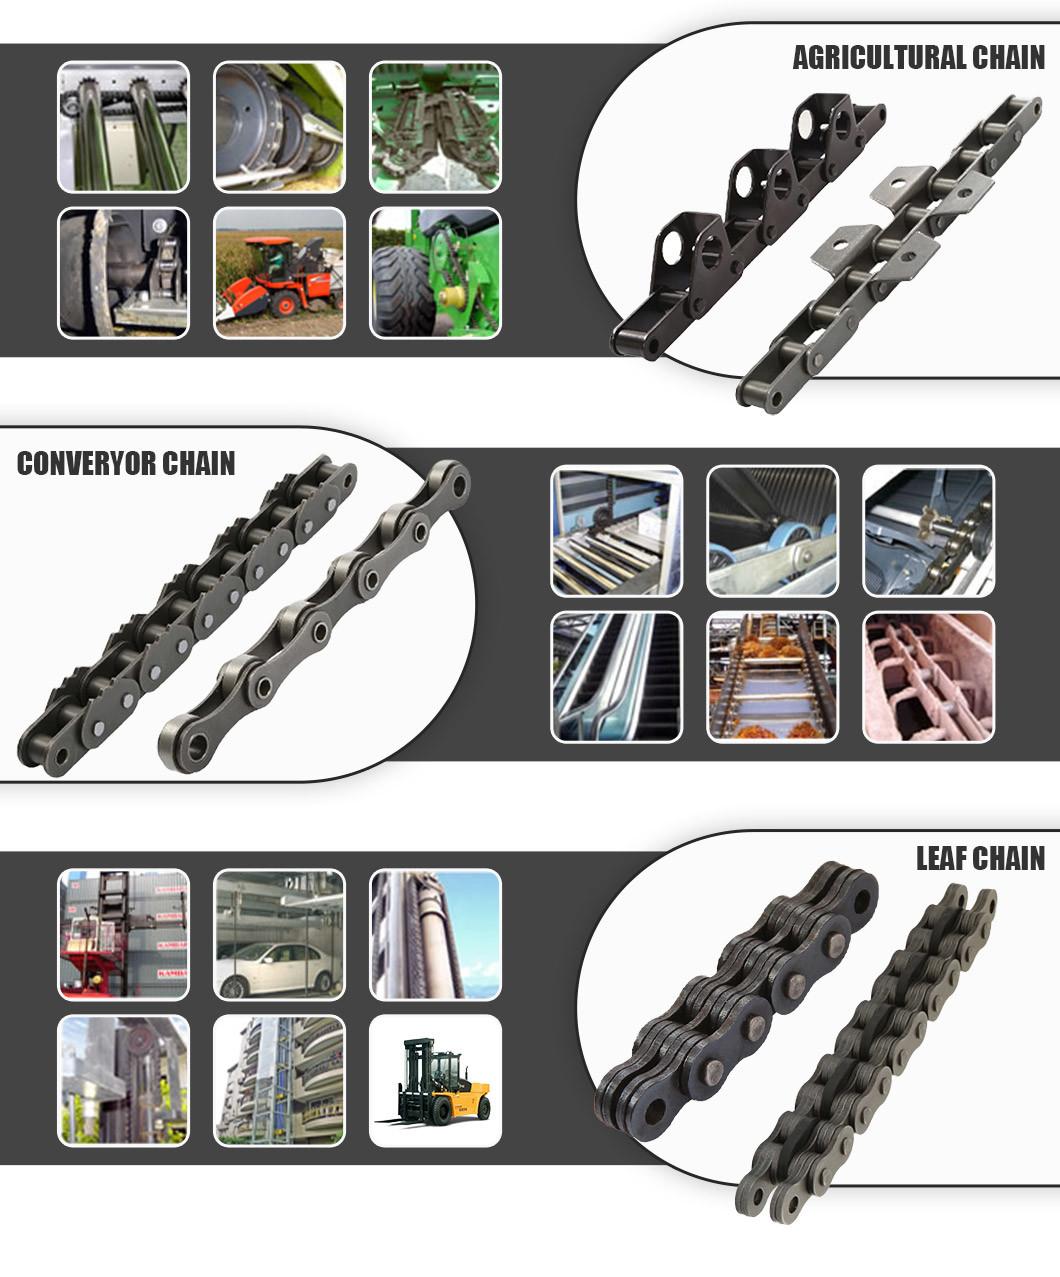 High Precision Conveyor Roller Chain Ca627-Cpef7